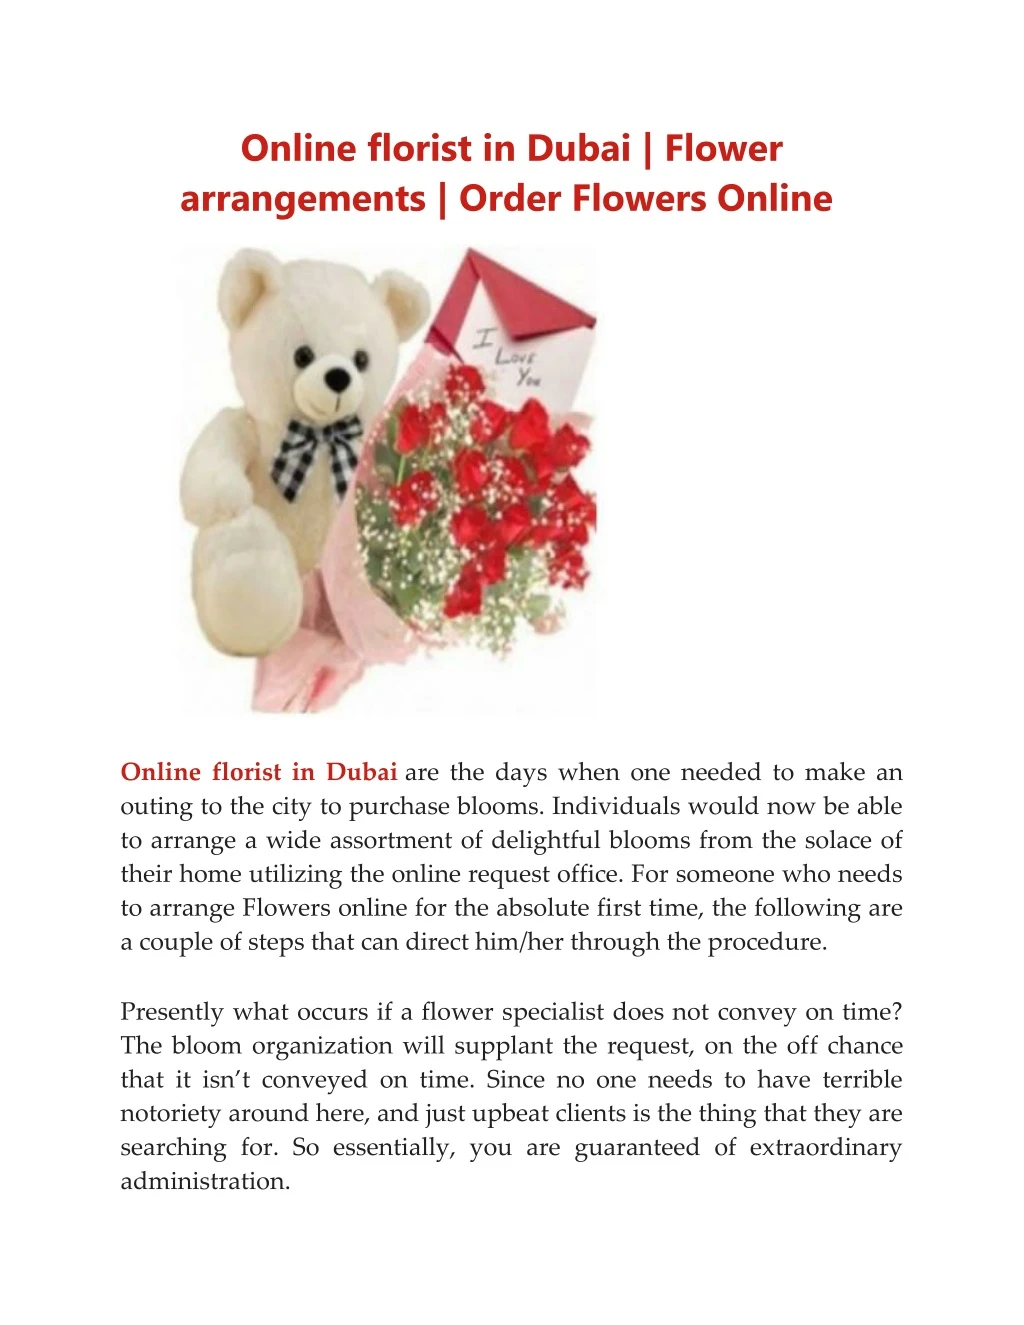 online florist in dubai flower arrangements order